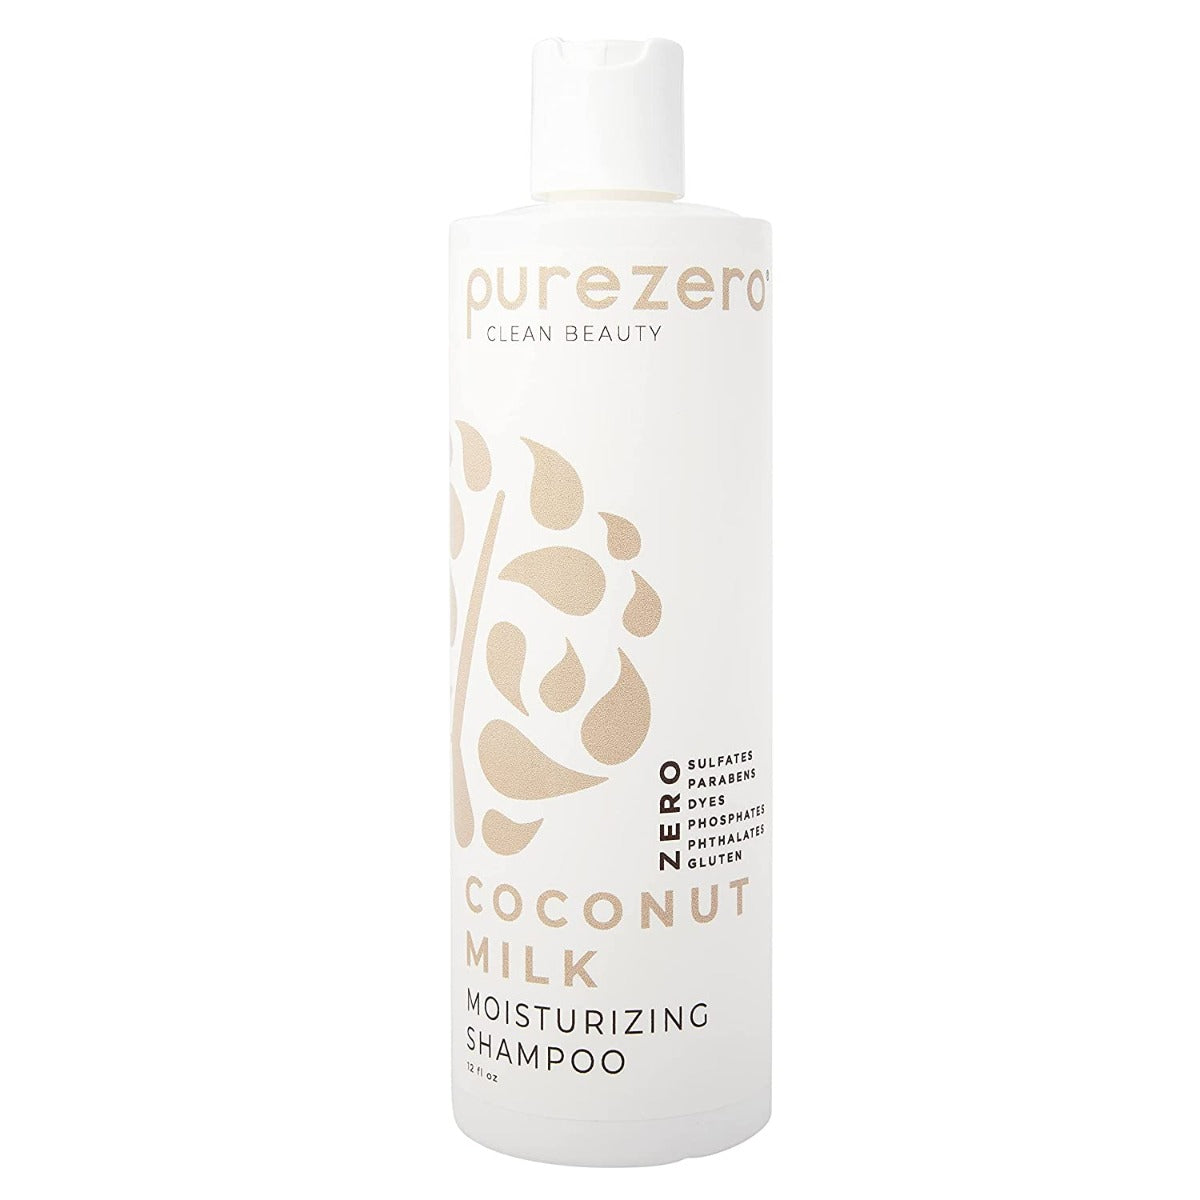 PUREZERO: Coconut Milk Moisturizing Shampoo, 12 fo